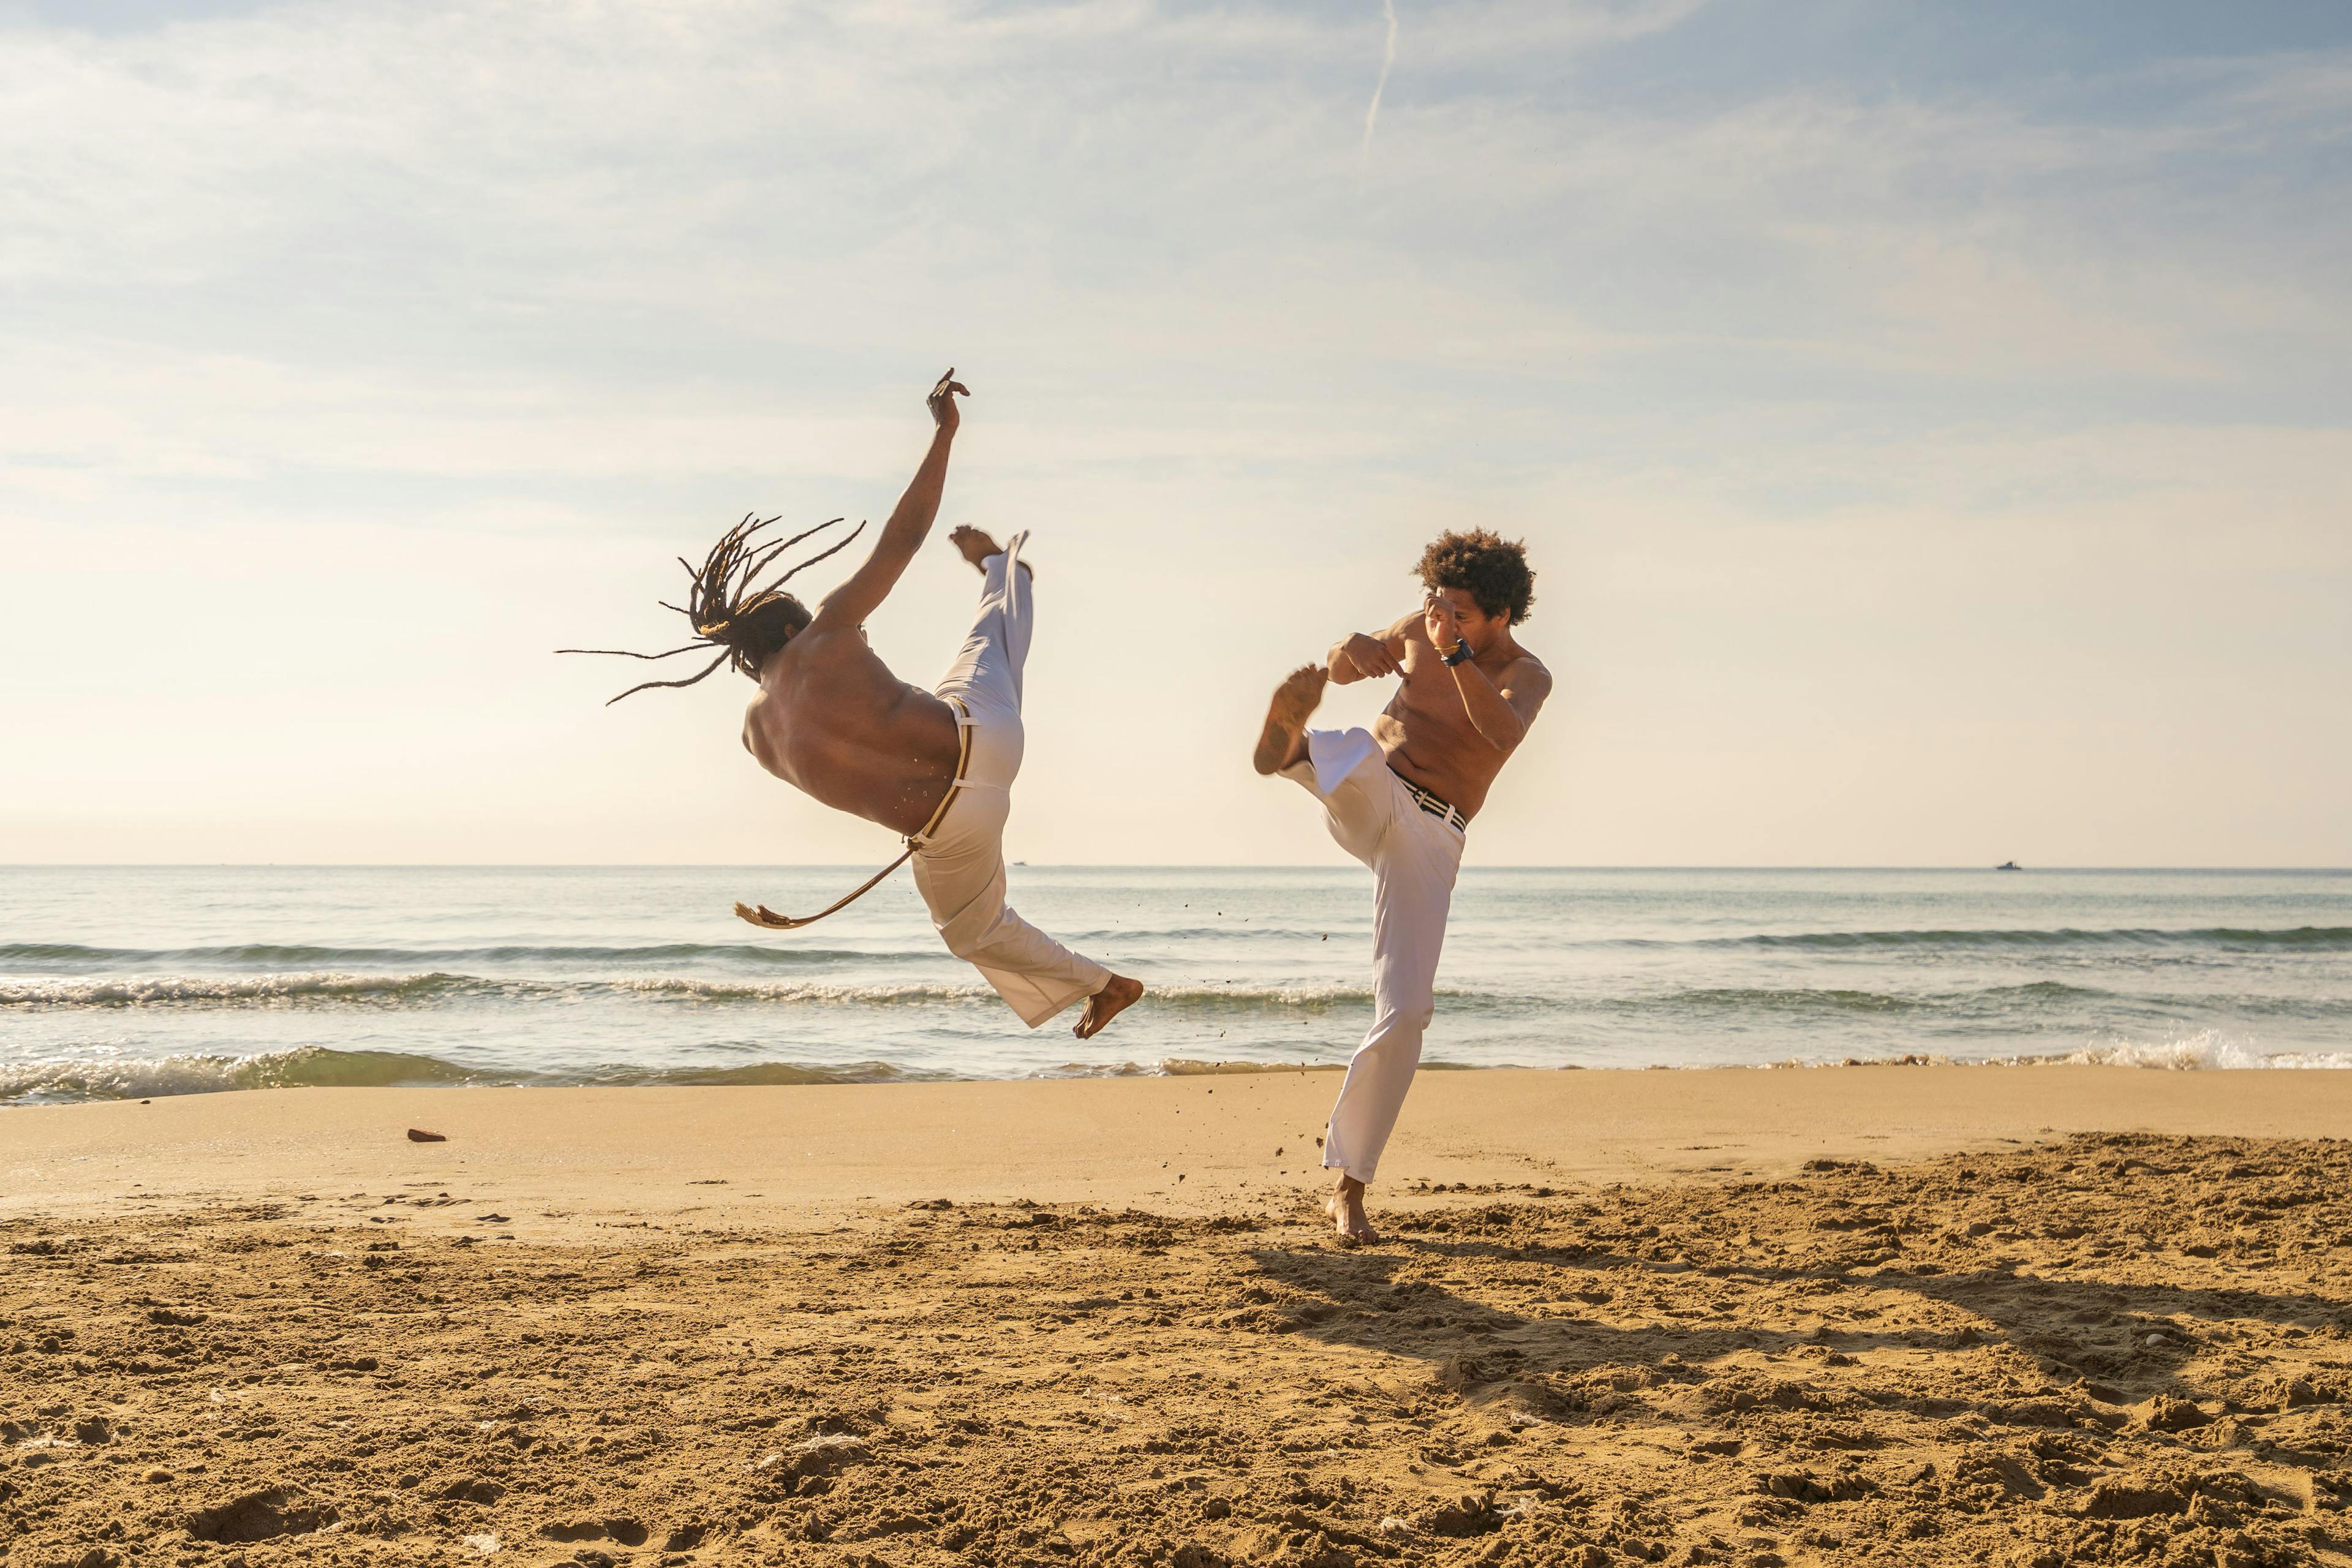 Men train capoeira on the beach